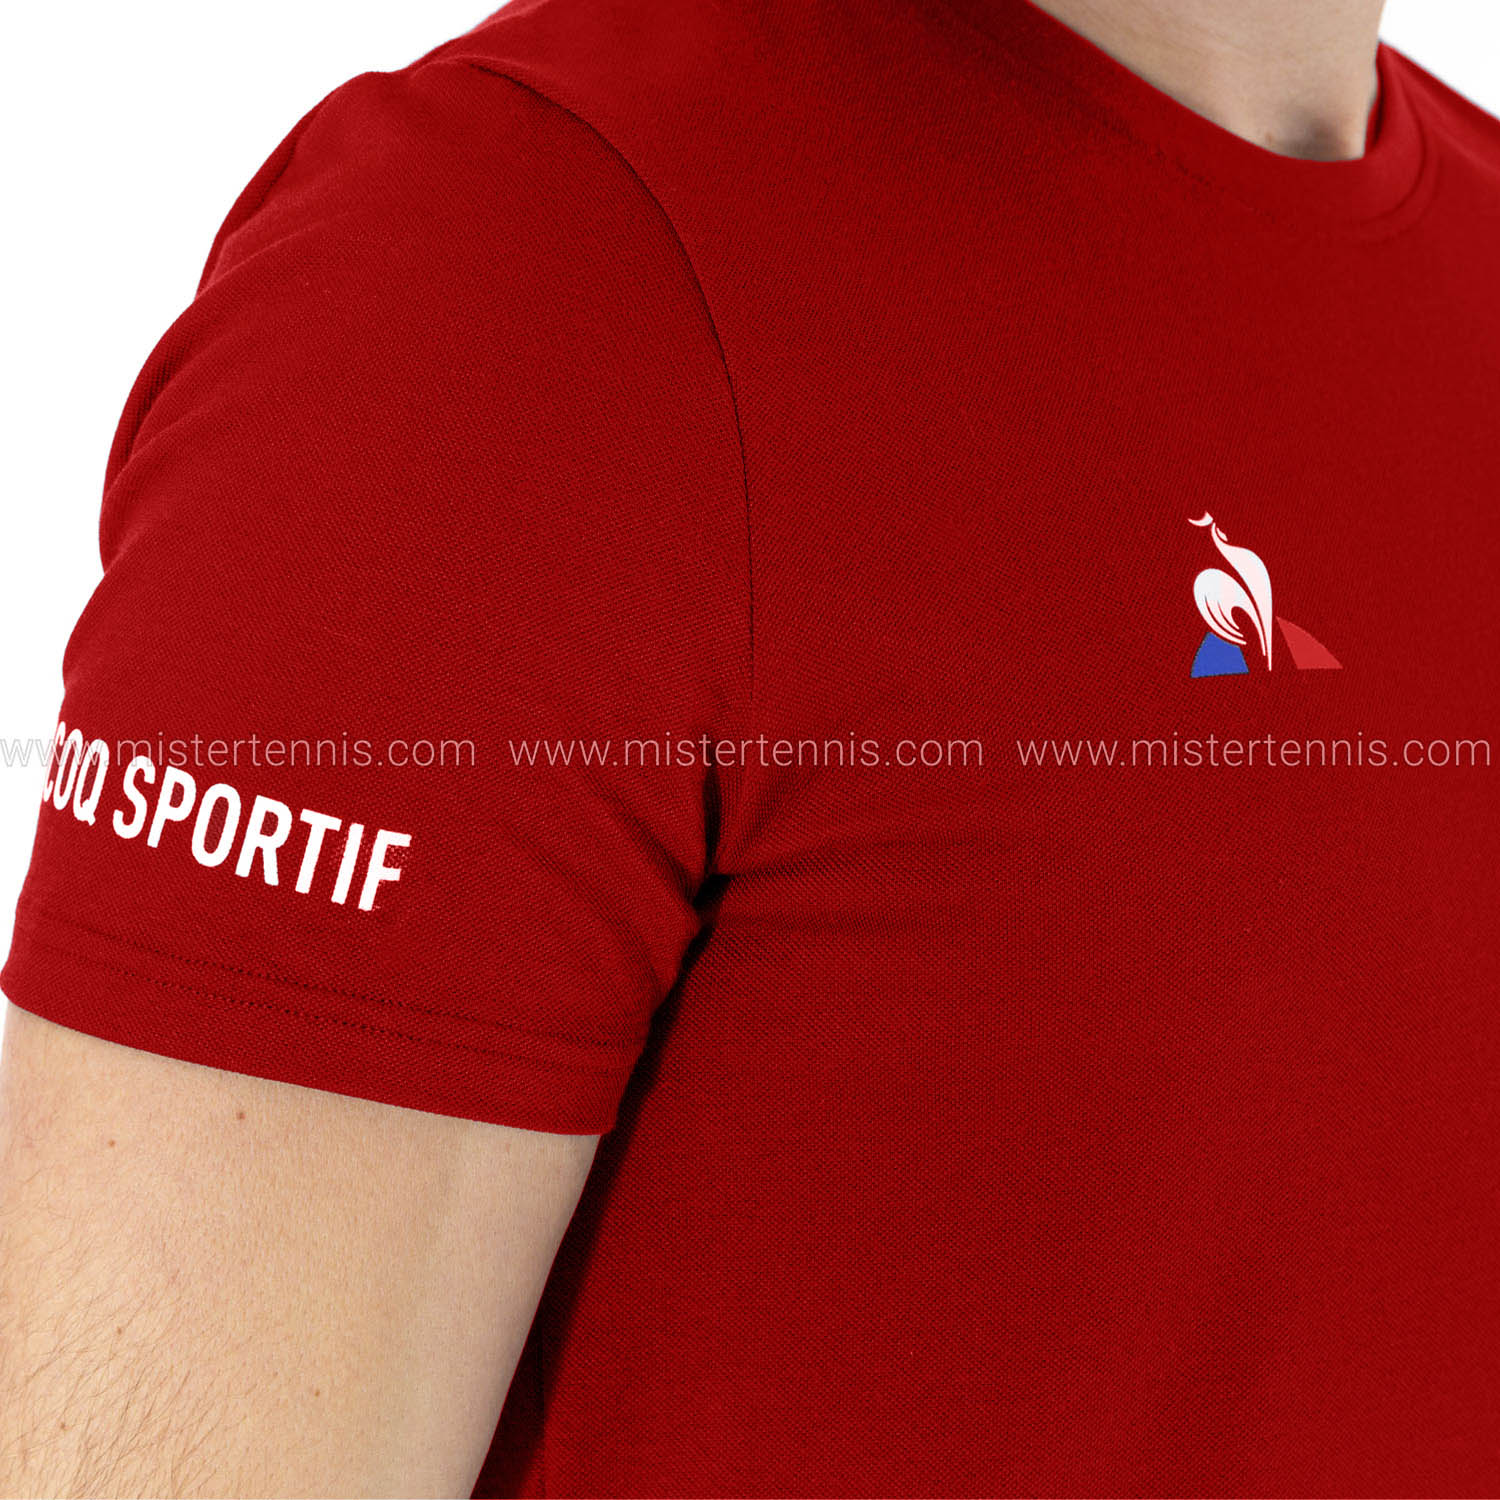 Le Coq Sportif Logo Camiseta - Pur Rouge